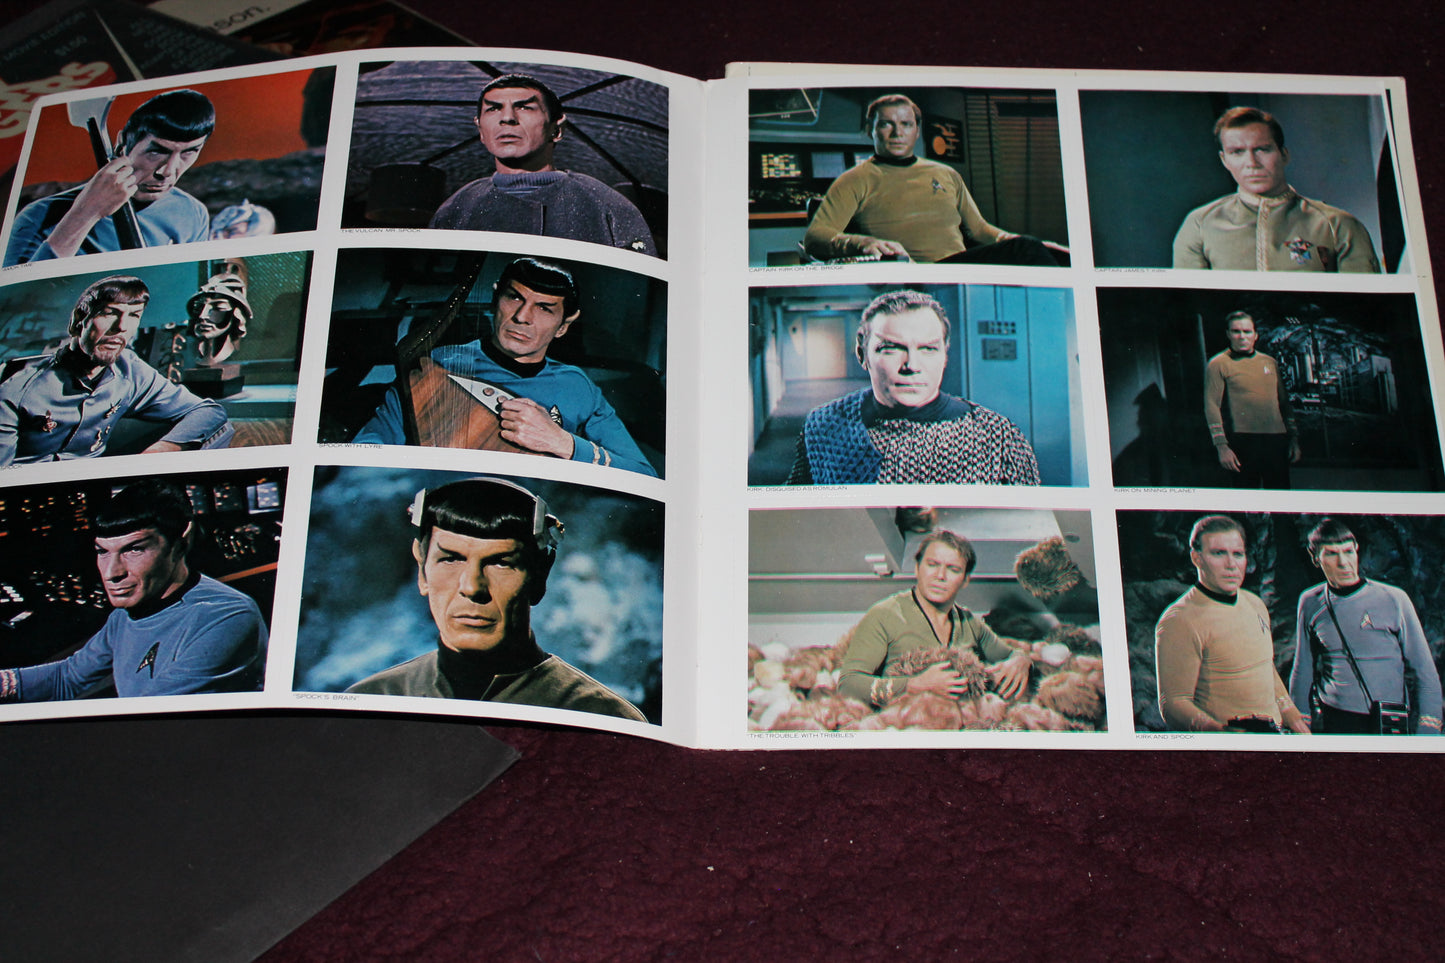 Star Trek Post Card Book